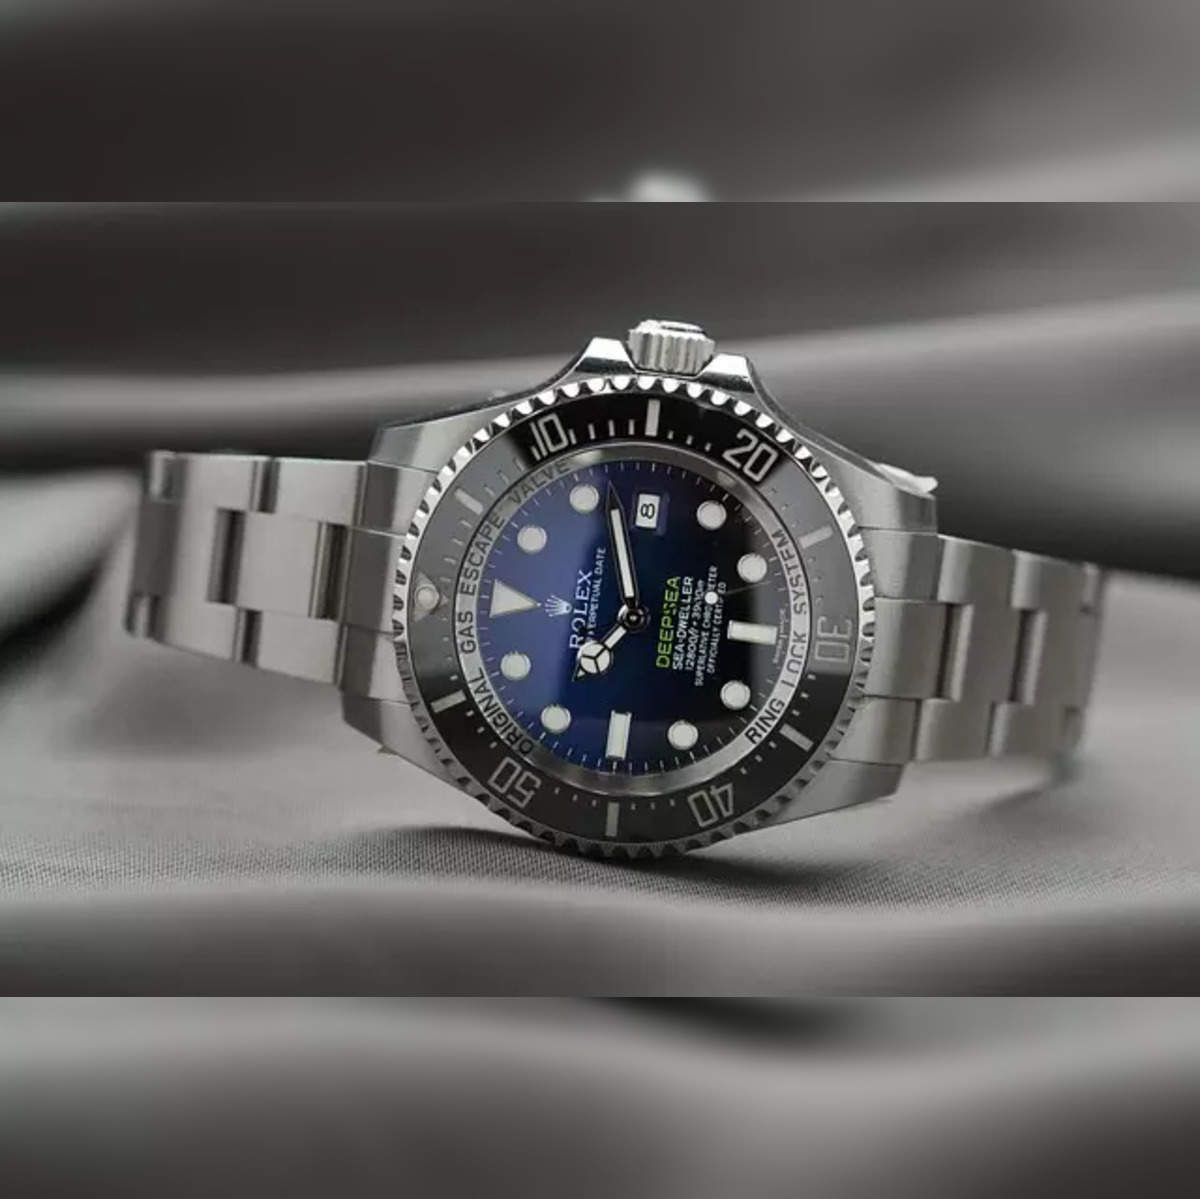 Men's & Women's Watches in Philadelphia | Luxury Watches | Authentick